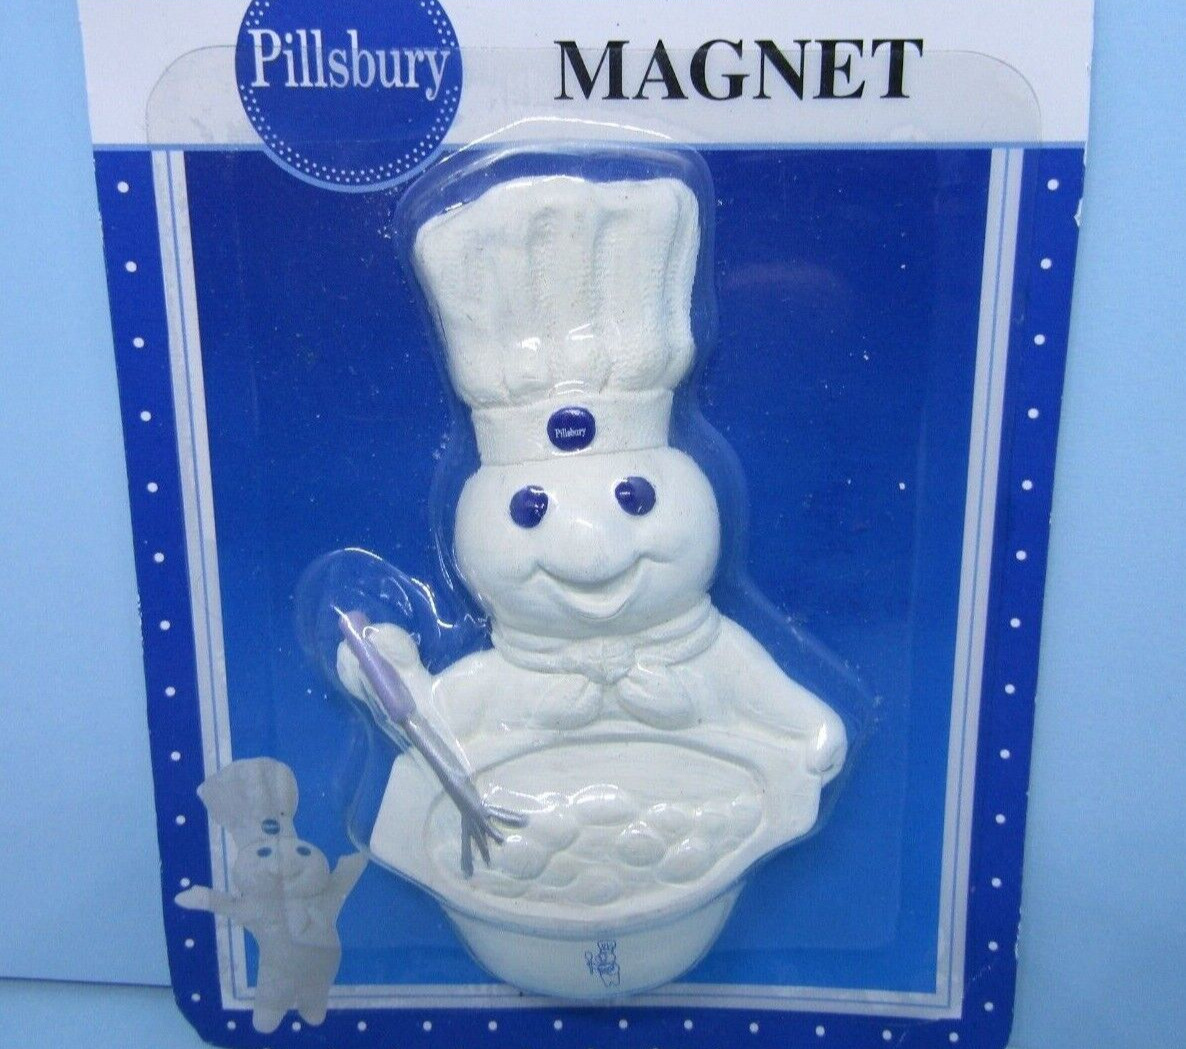 FS NIP Pillsbury Doughboy MAGNET POPPIN' FRESH MIXING BOWL CERAMIC Trevco 1998